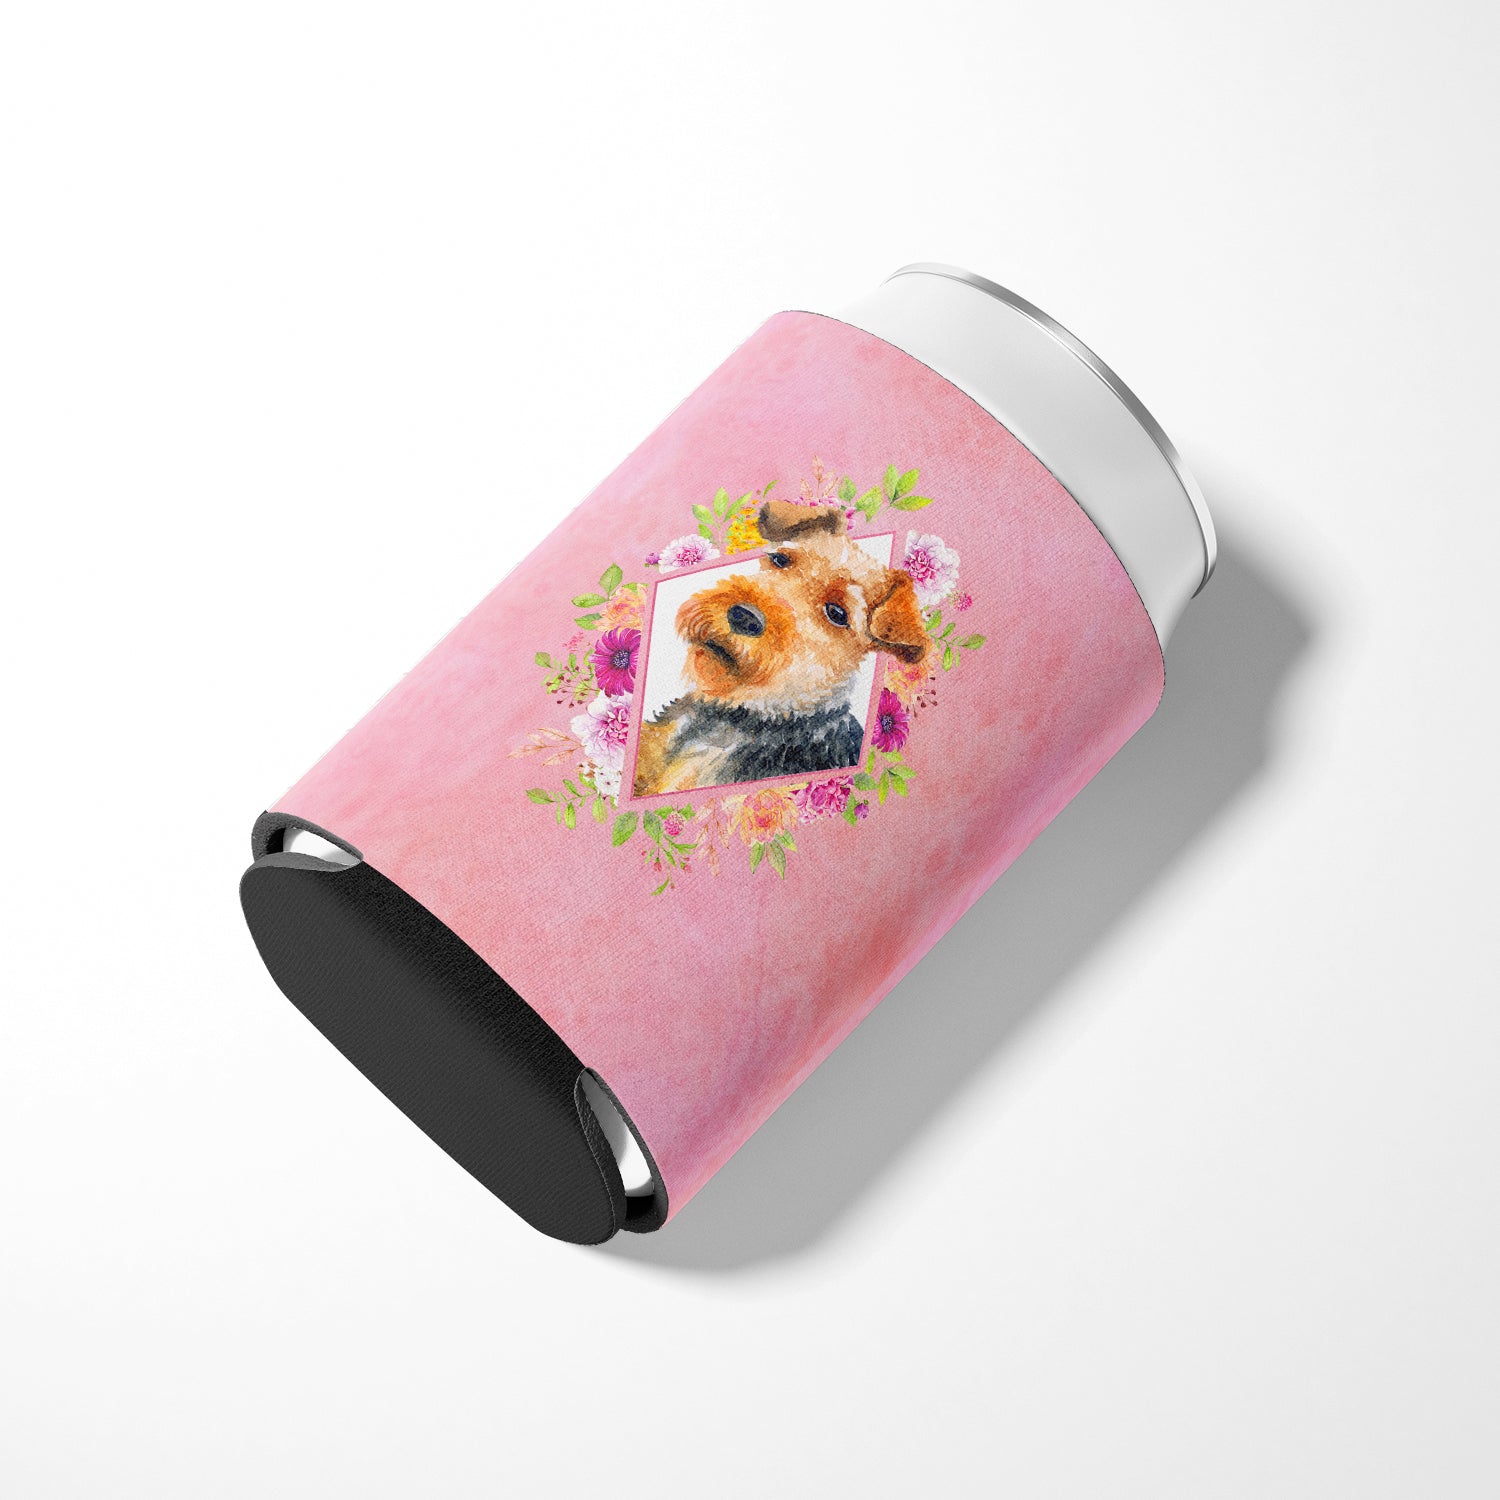 Welsh Terrier Pink Flowers Can or Bottle Hugger CK4192CC